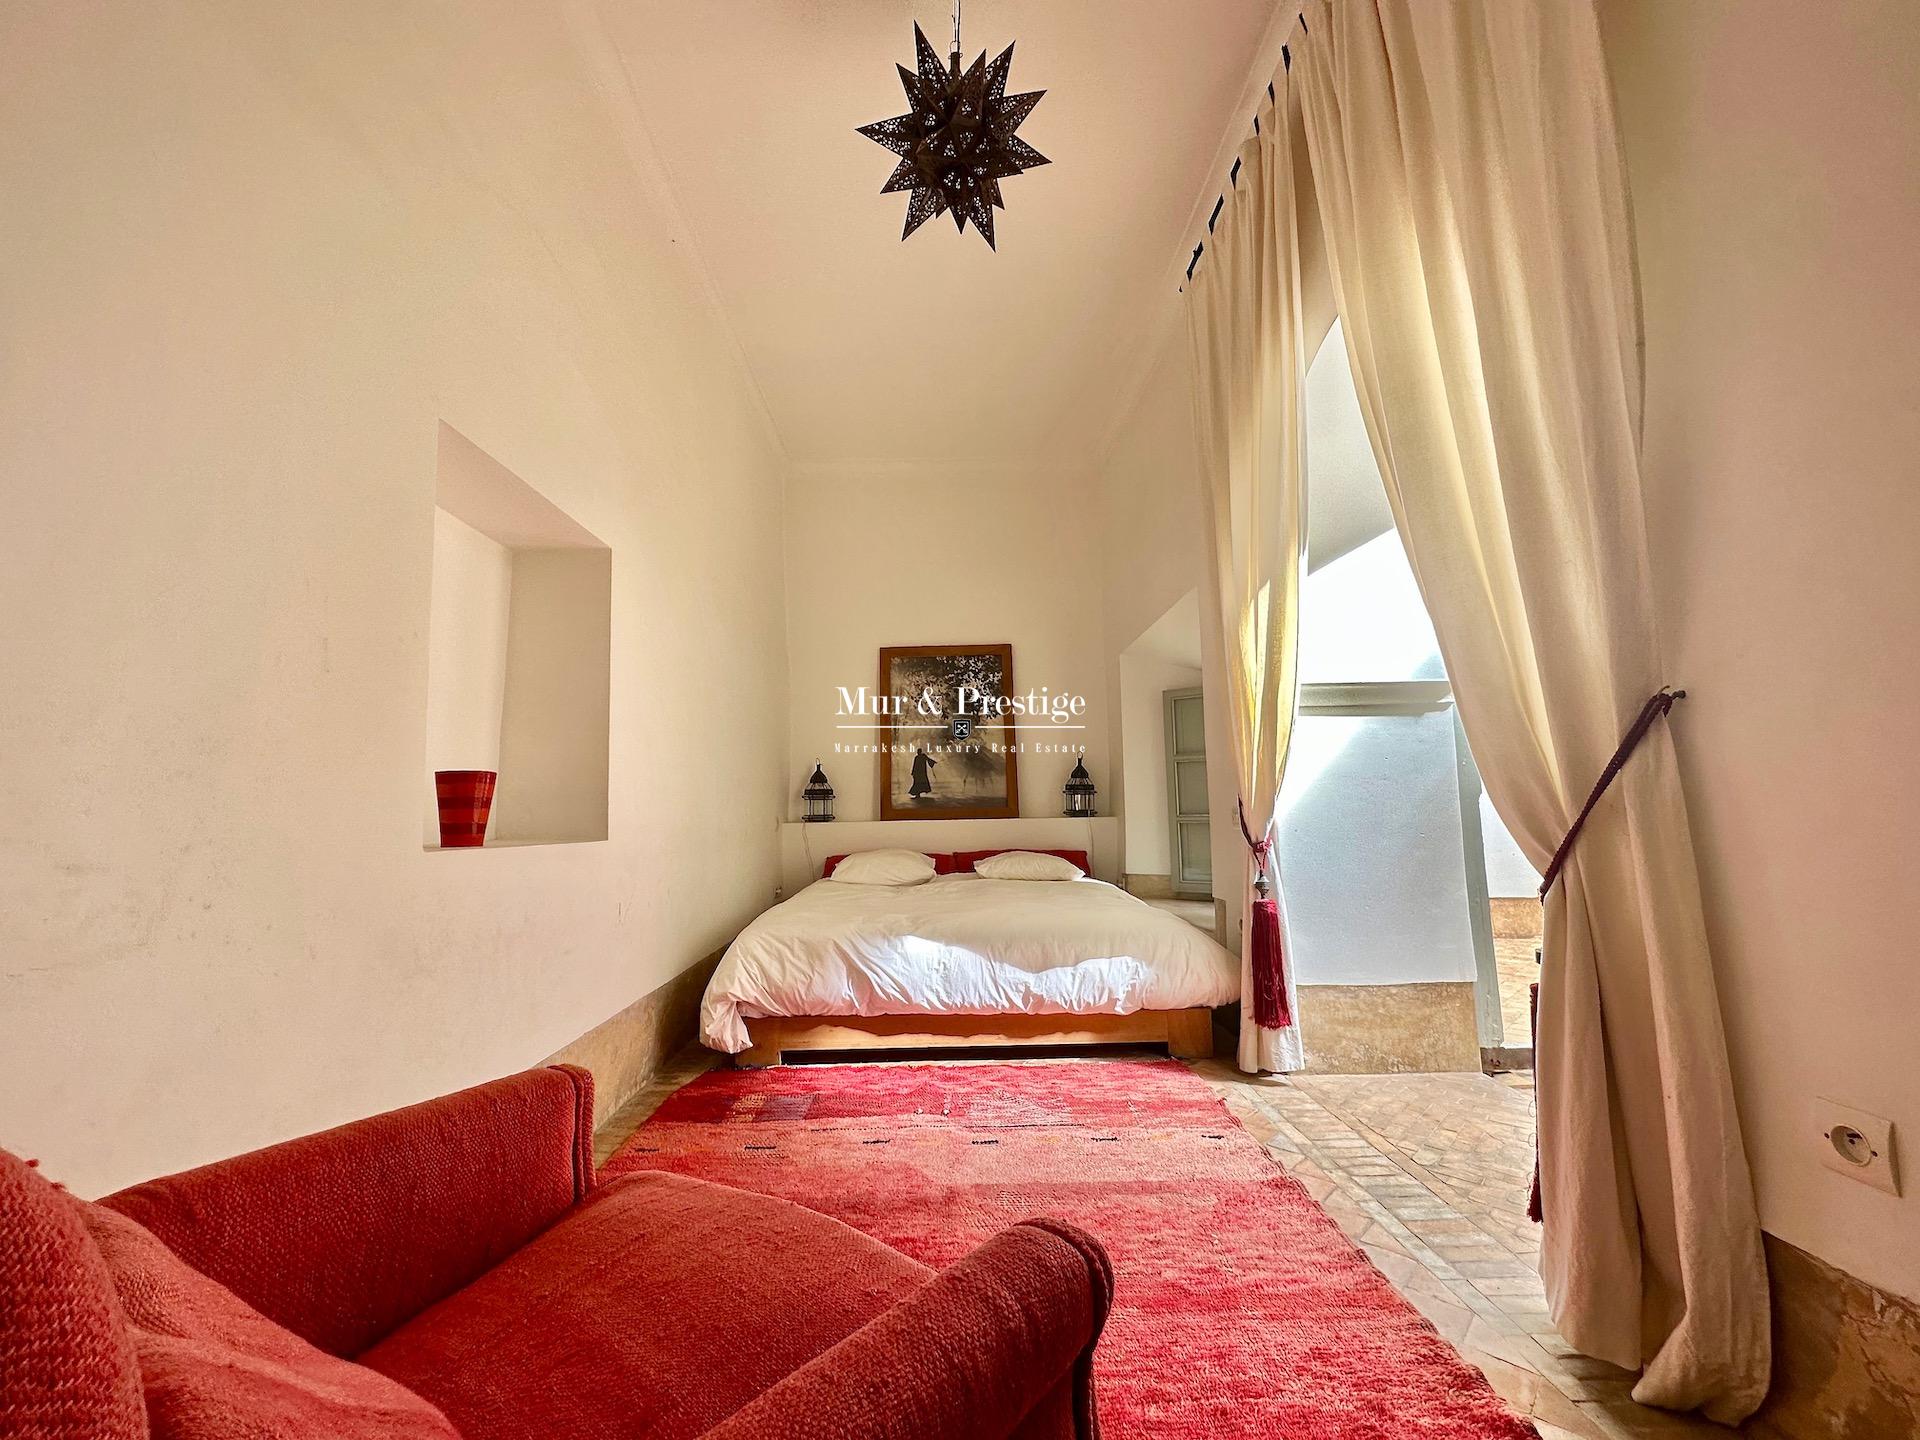 Riad à Vendre Dans La Médina de  Marrakech – Quartier Riad Zitoun